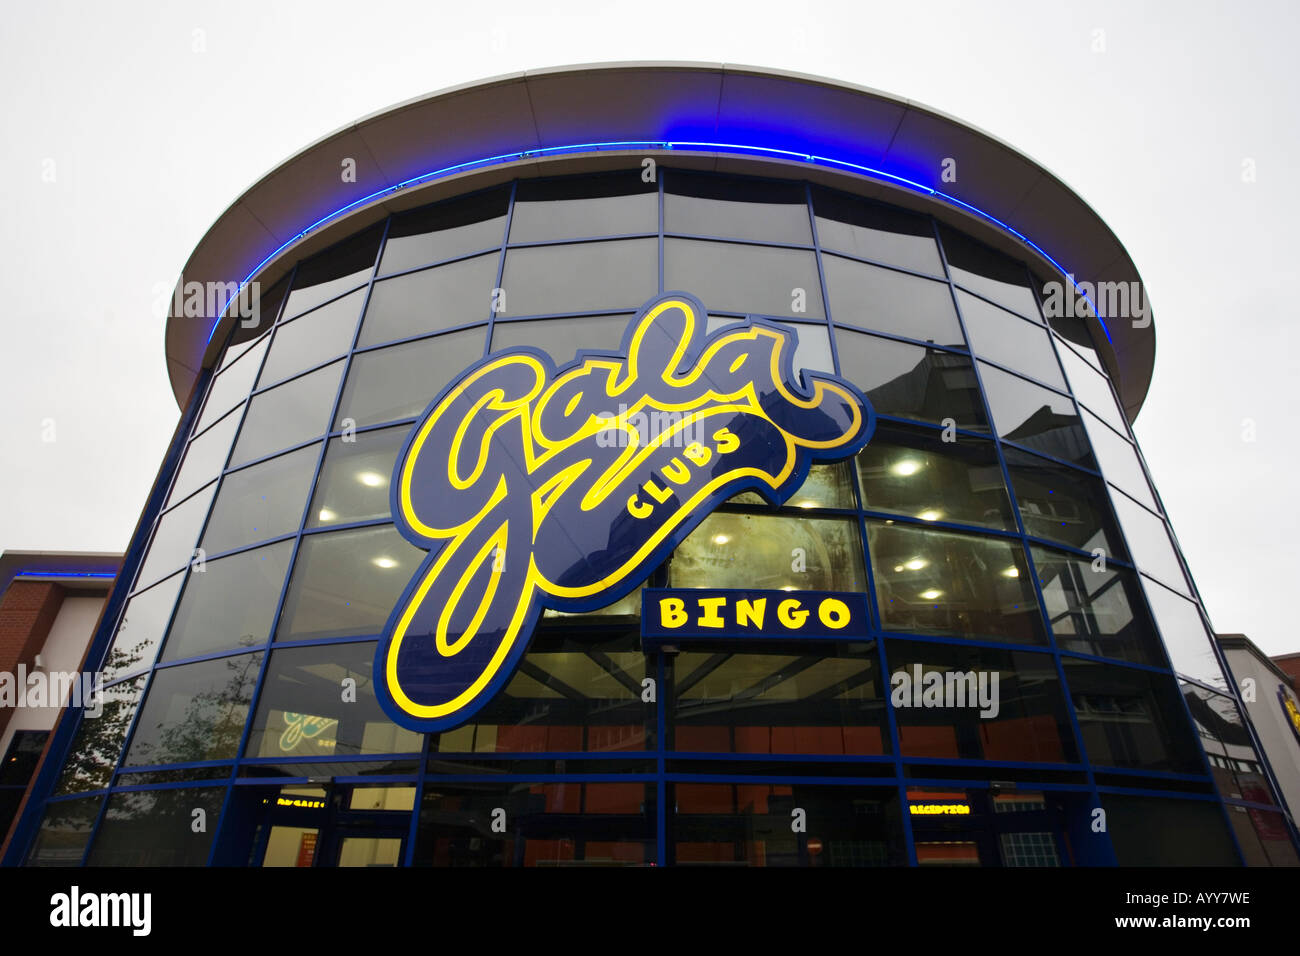 A Gala Bingo club in Coventry UK Stock Photo